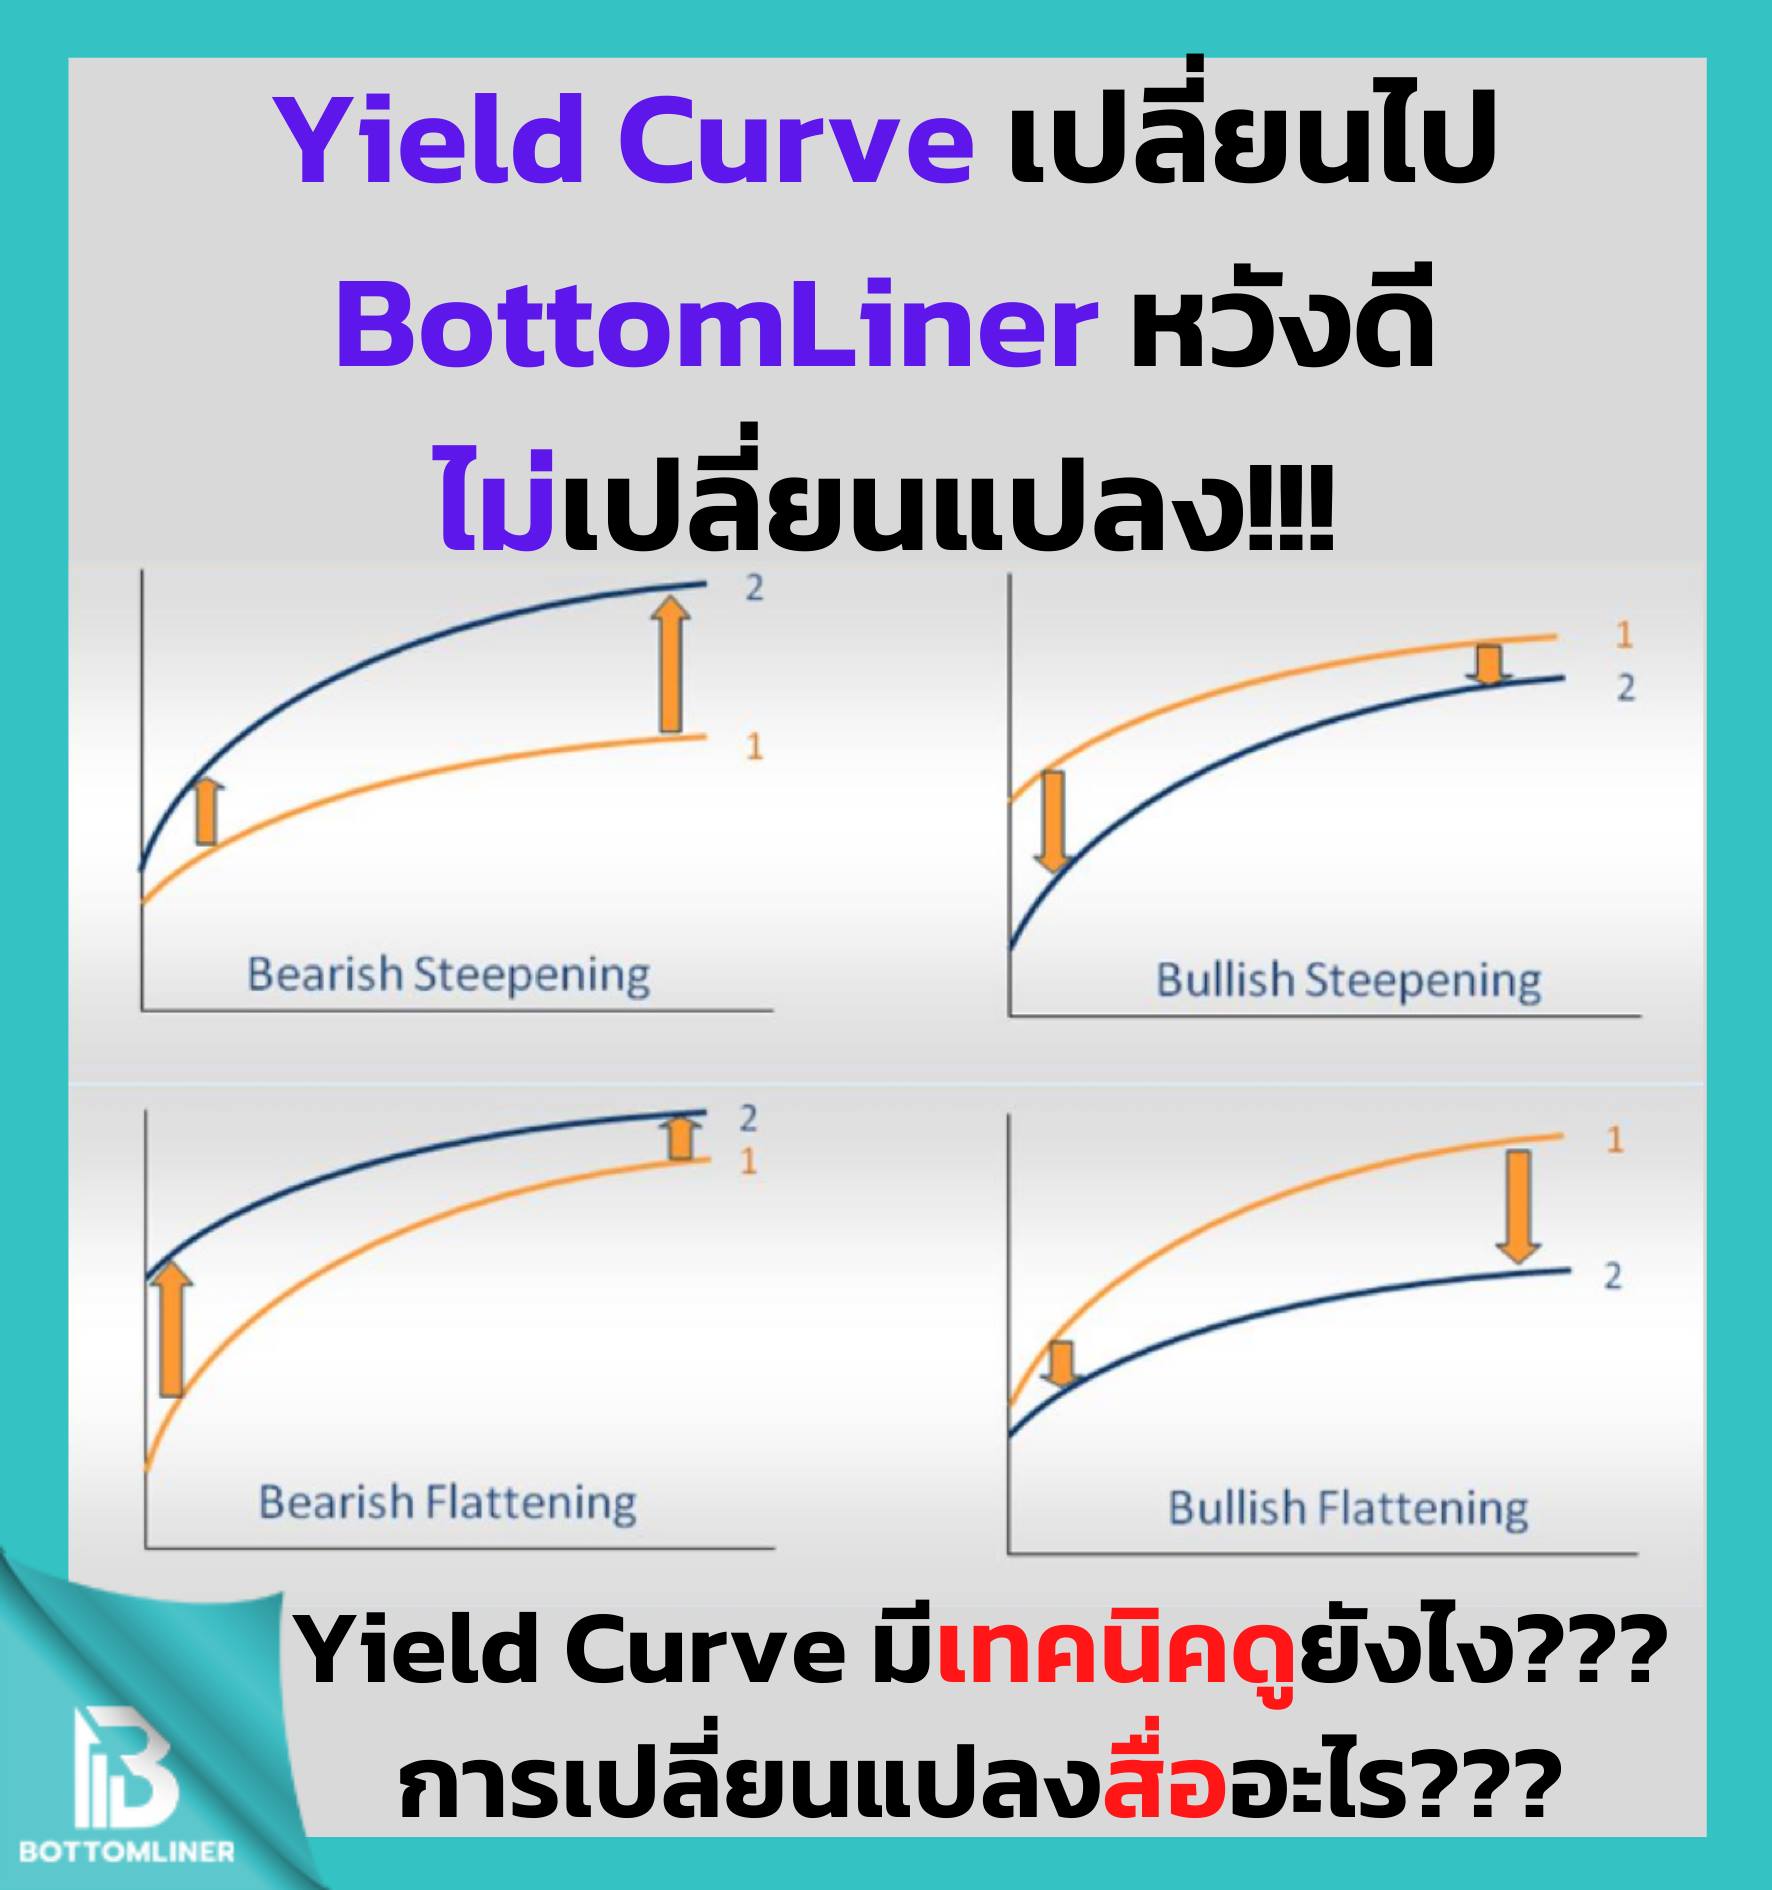 Yield Curve เปลี่ยนไป BottomLiner หวังดีไม่เปลี่ยนแปลง!!!